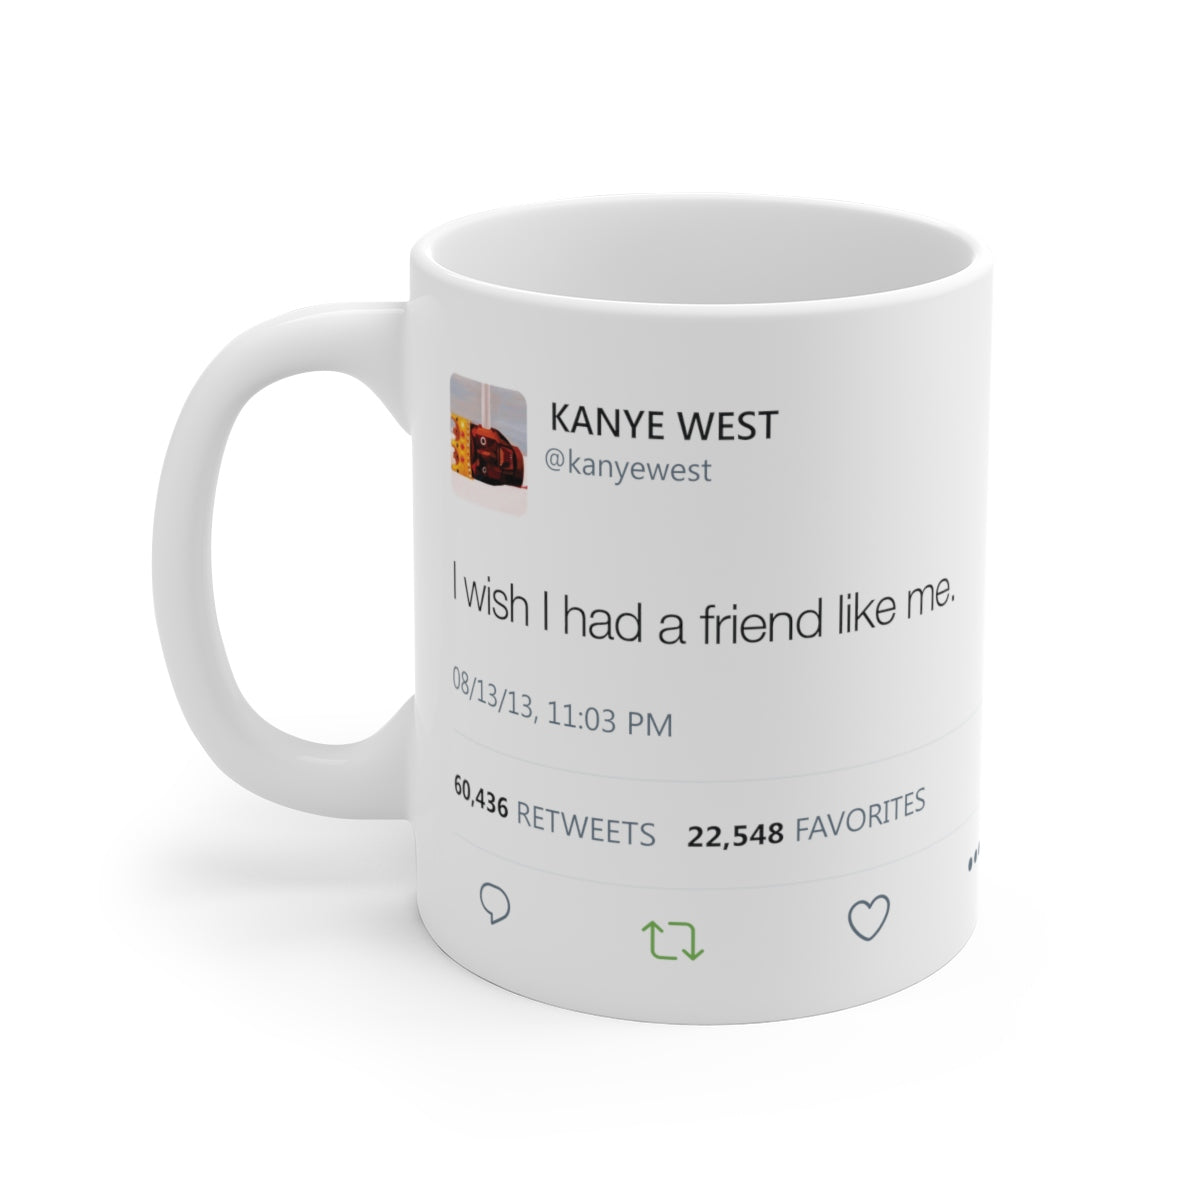 I wish I had a friend like me - Kanye West Tweet Mug-11oz-Archethype